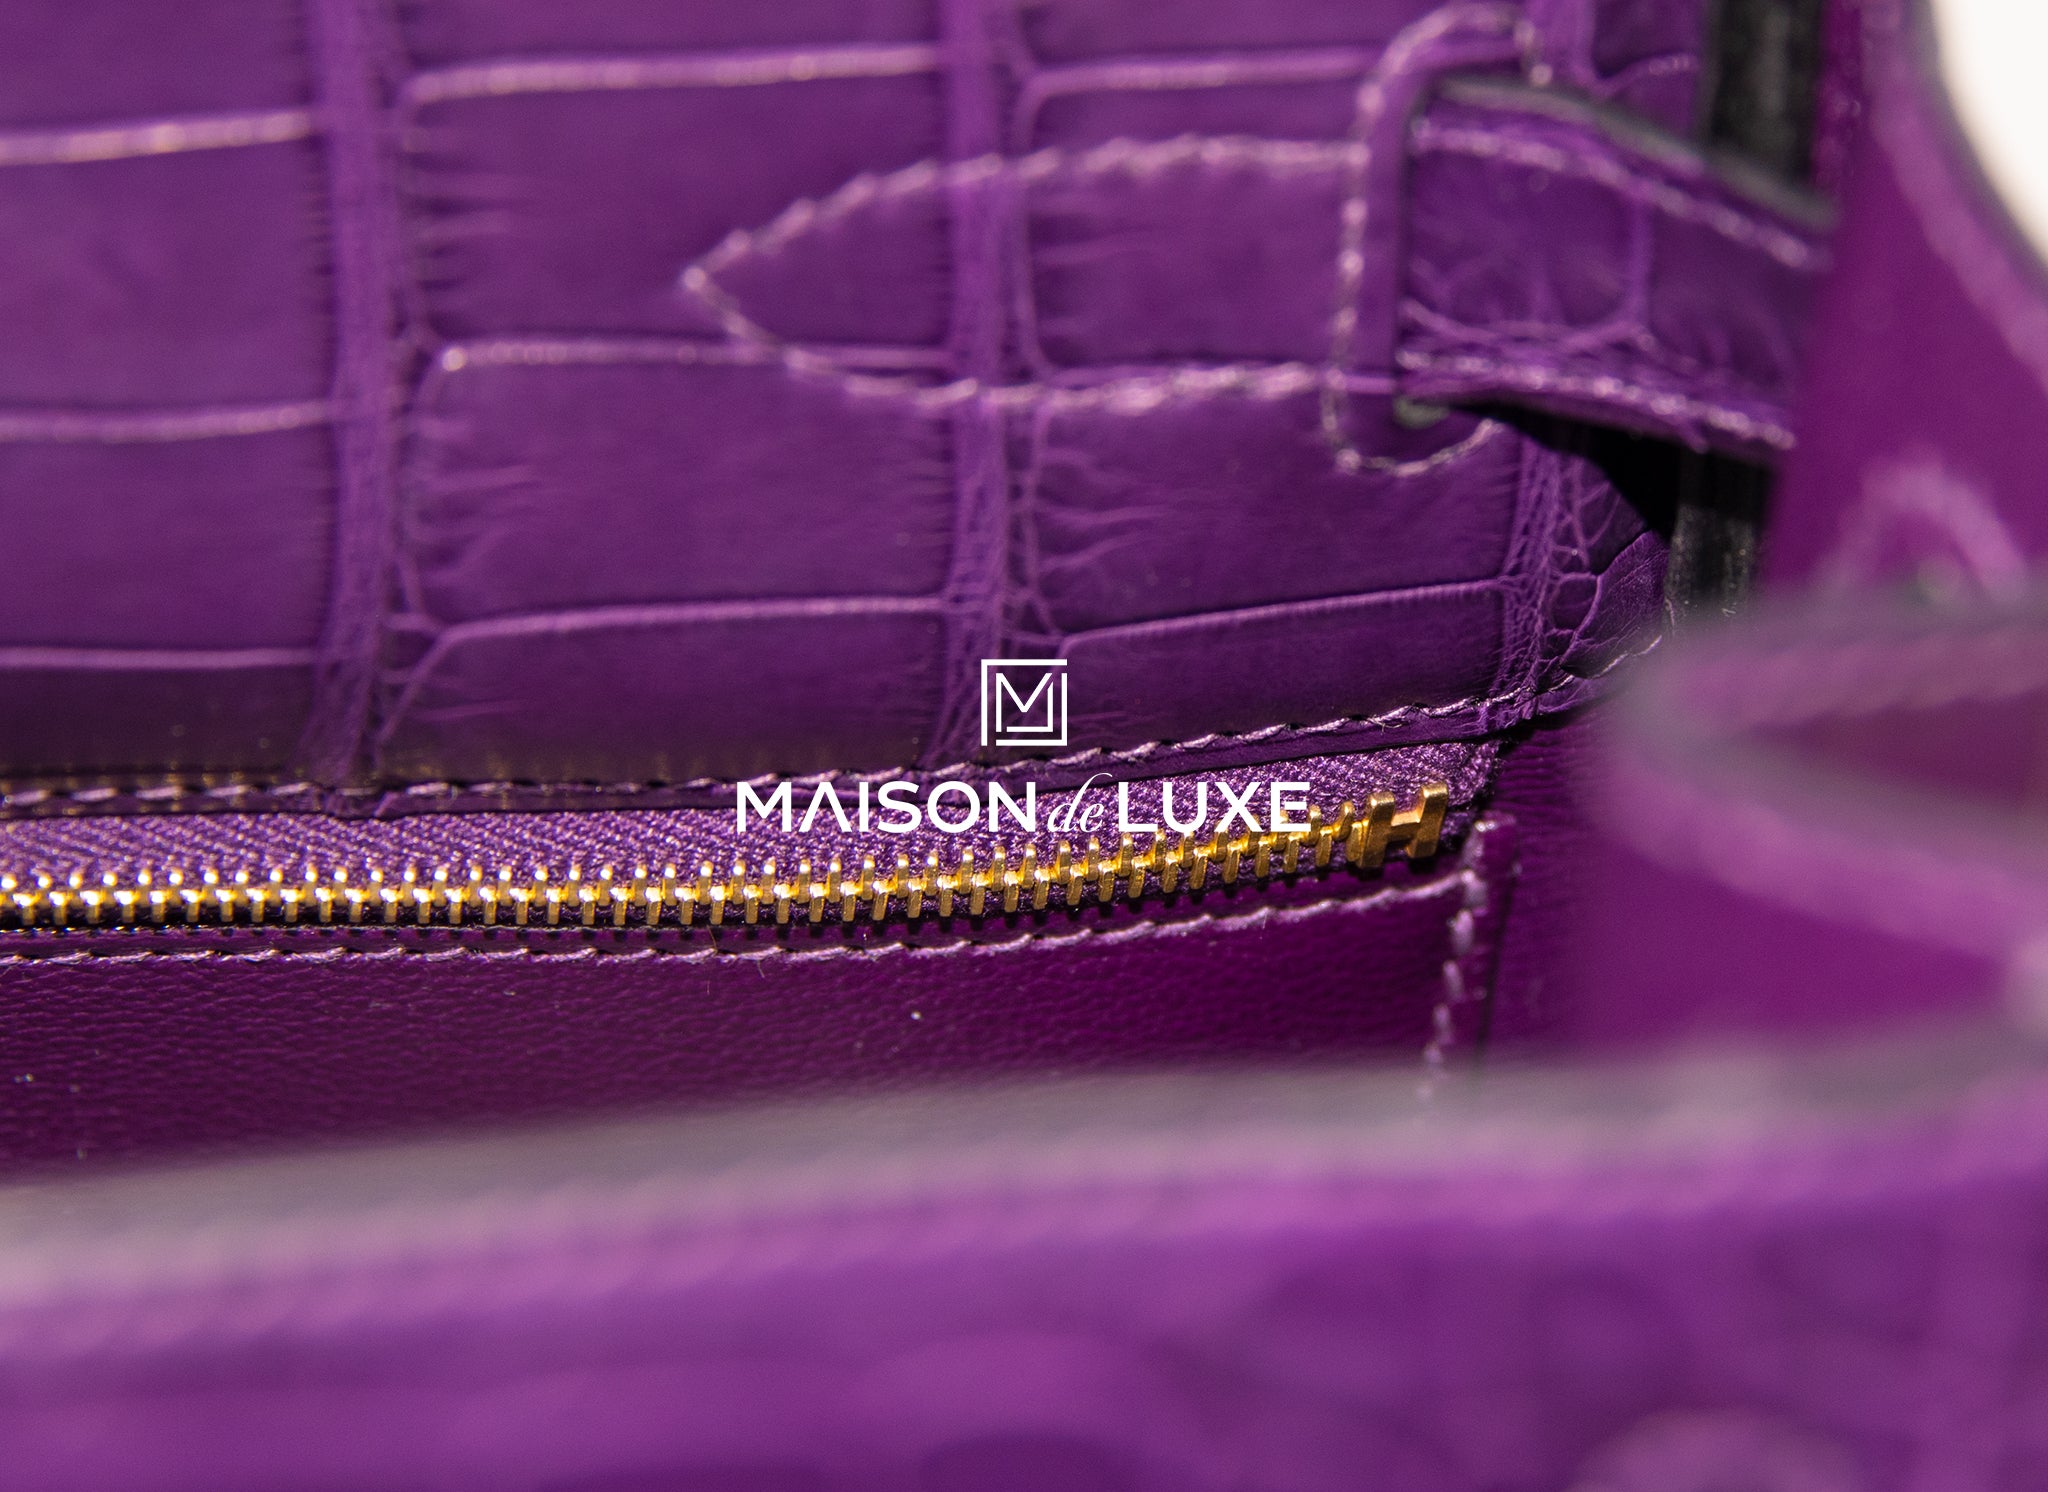 Hermes Purple Handbags